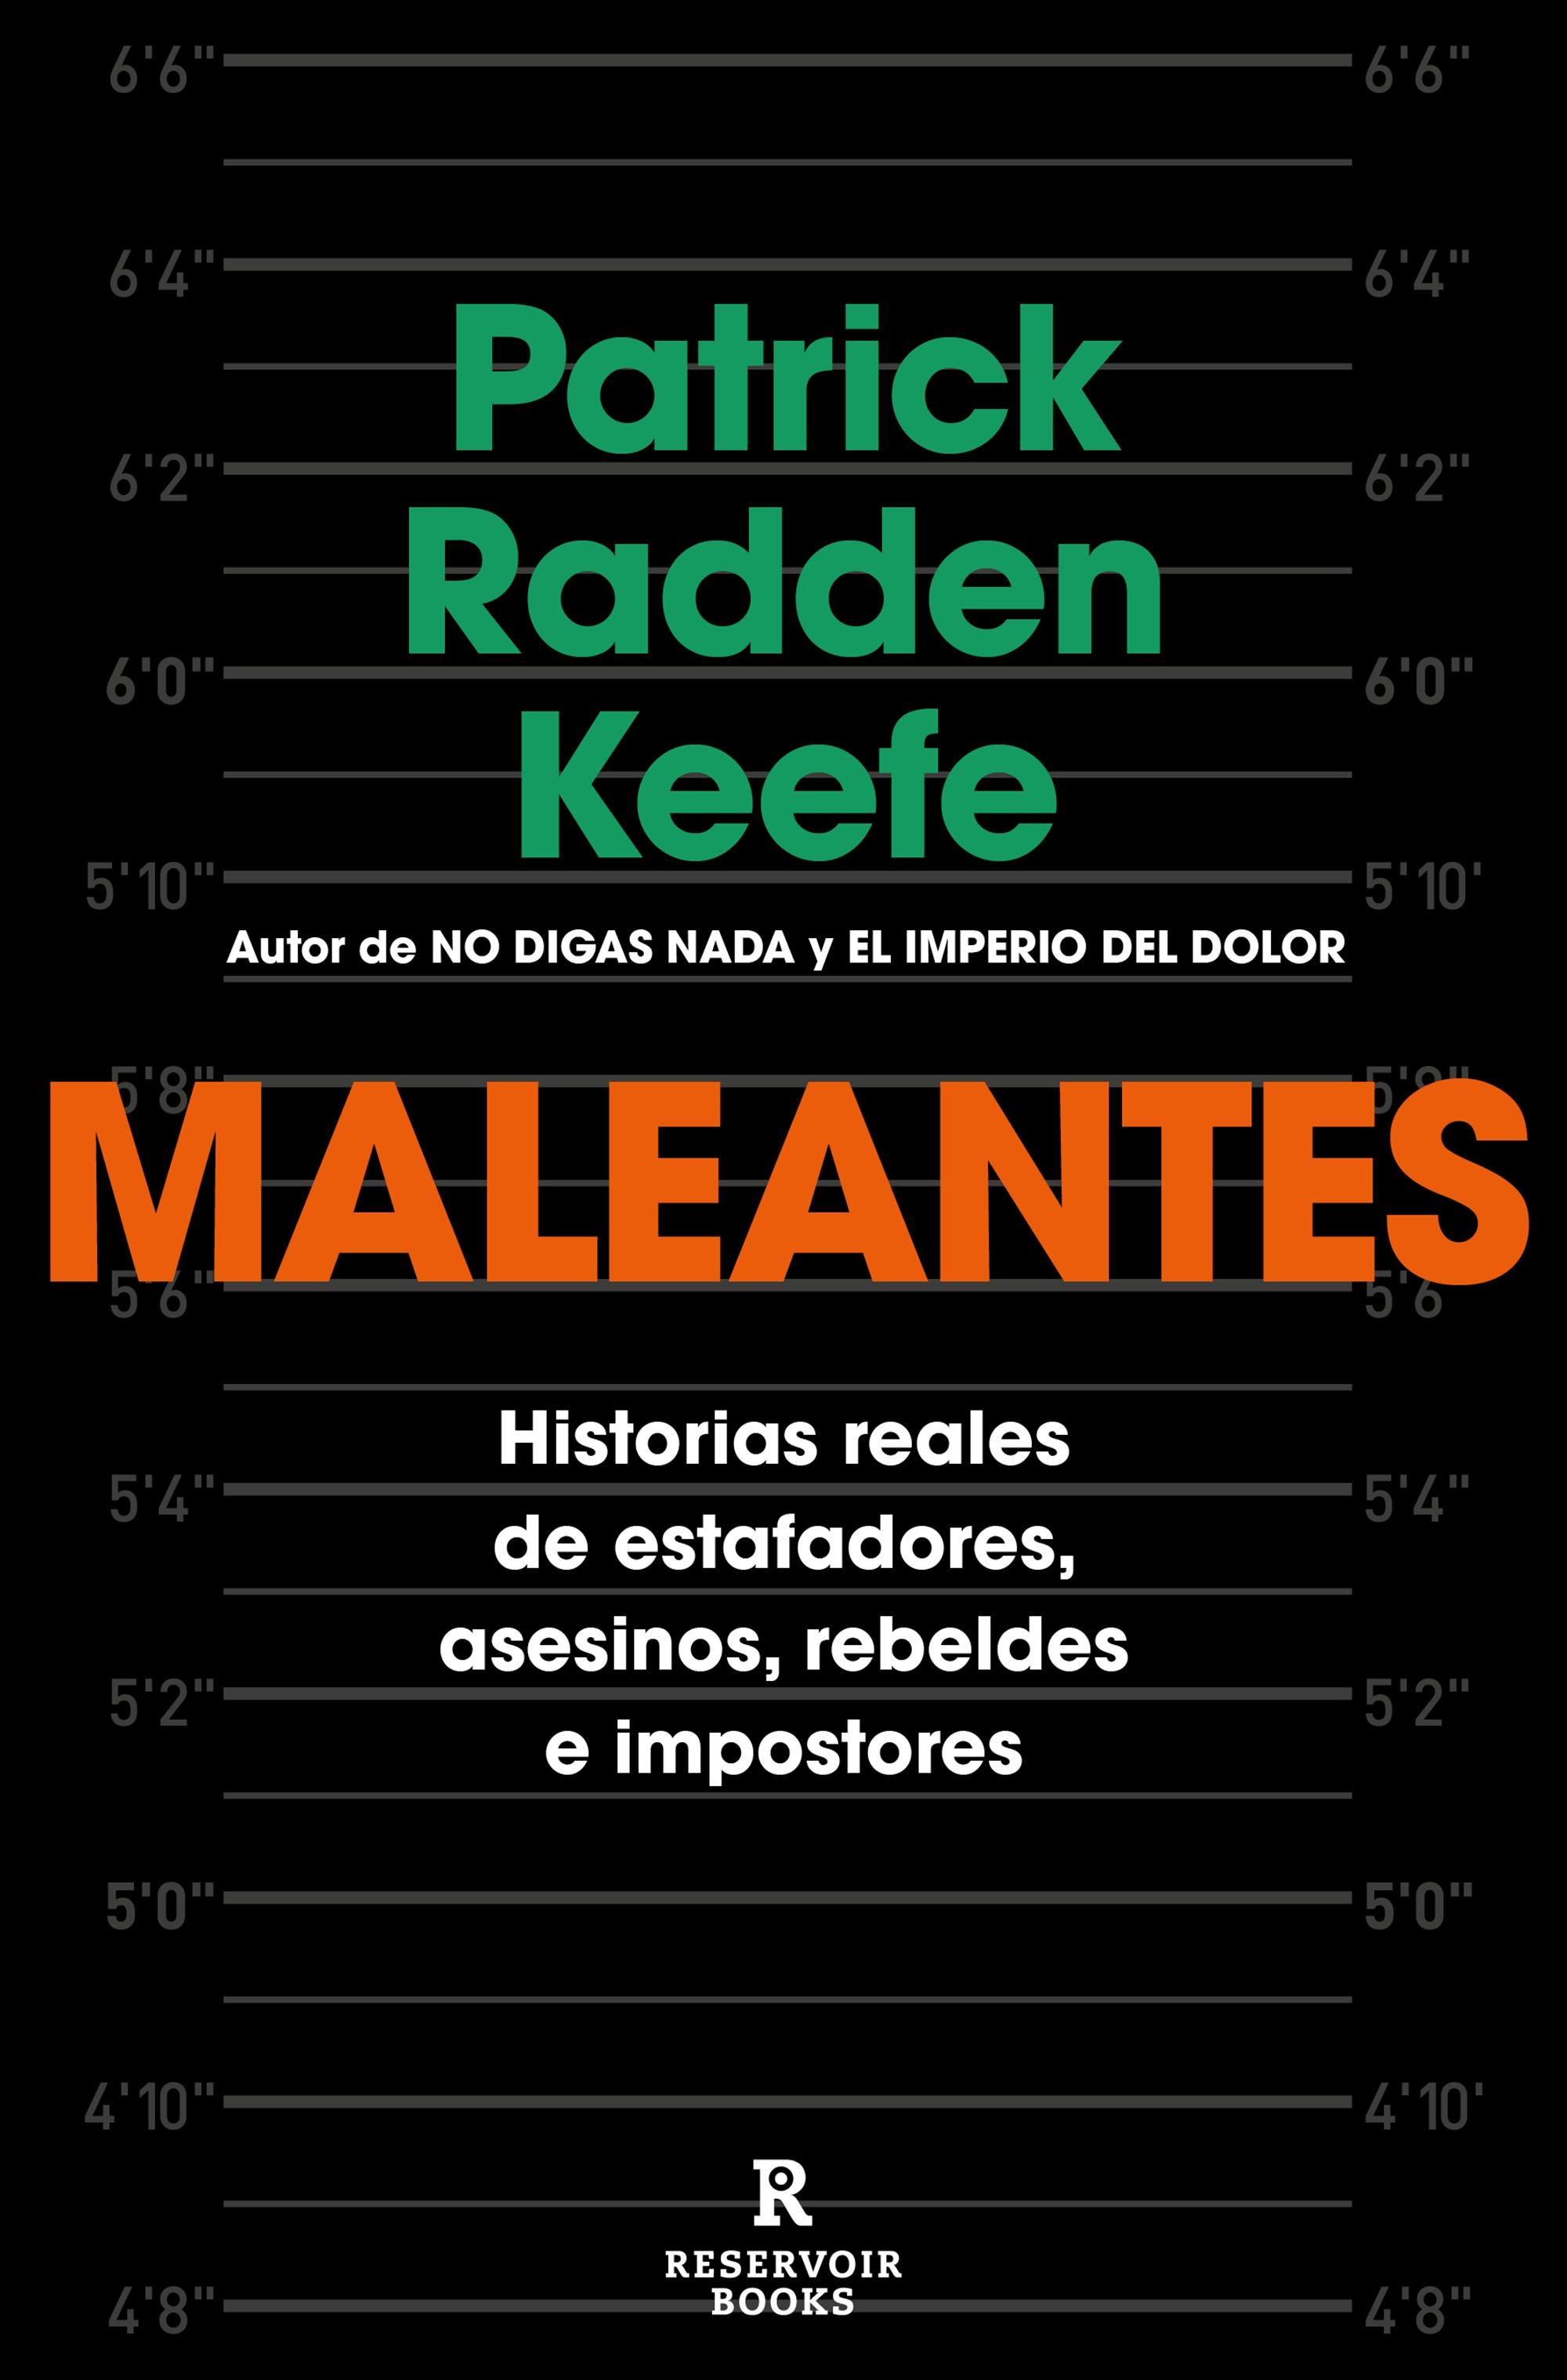 Maleantes "Historias Reales de Estafadores, Asesinos, Rebeldes e Impostores". 